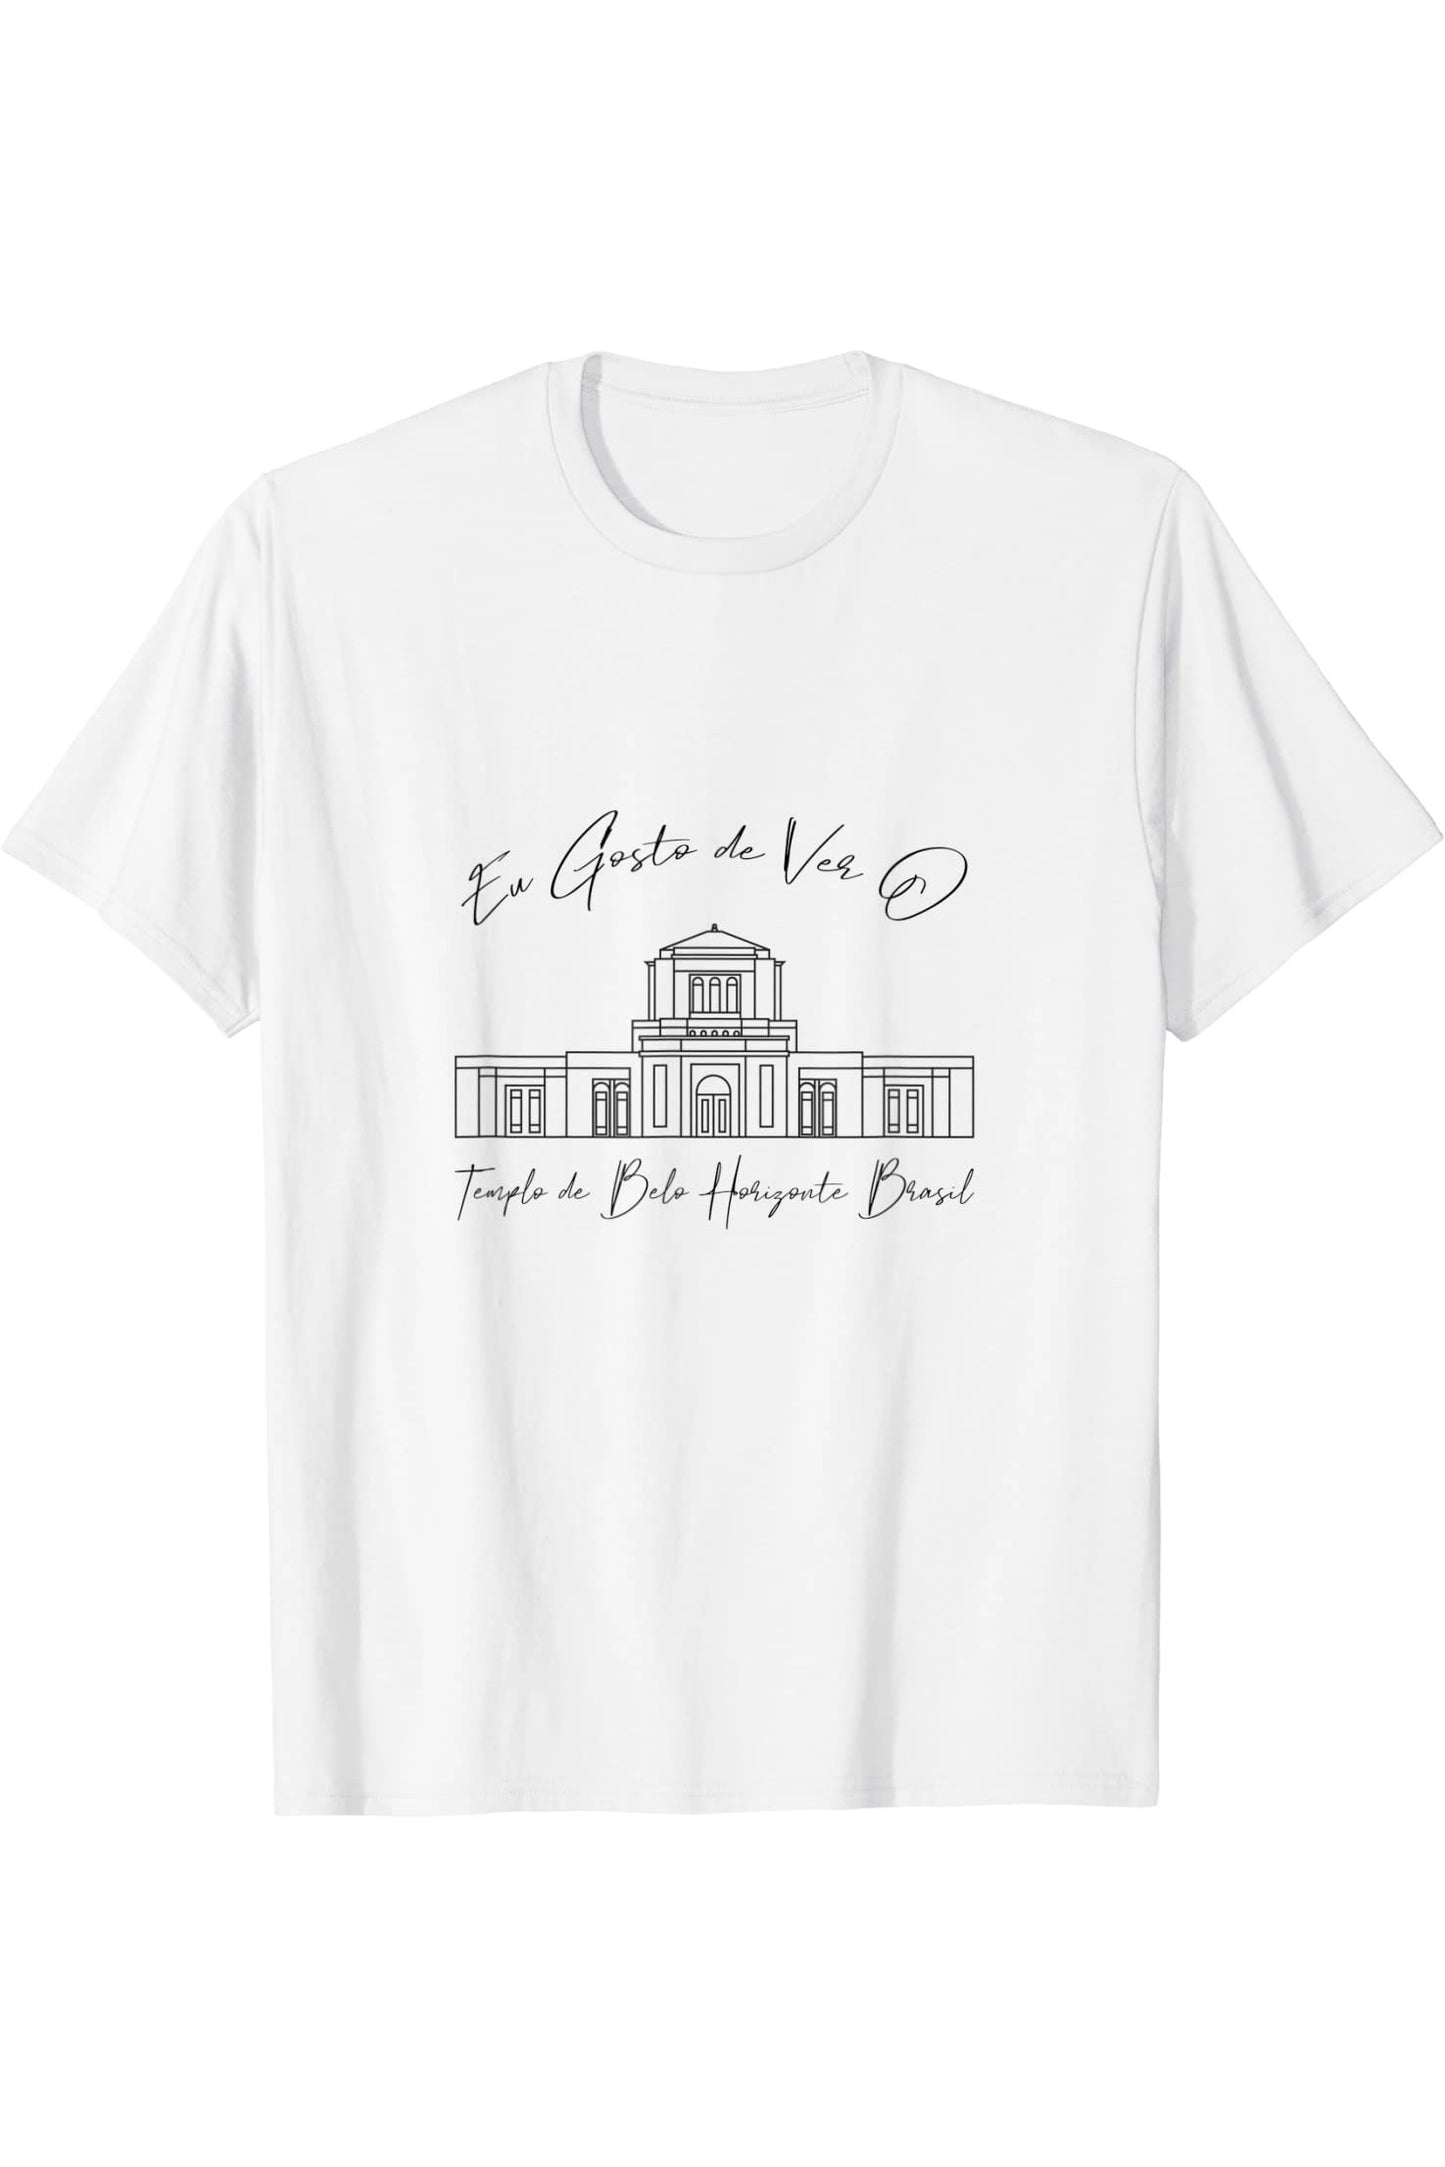 Belo Horizonte Brazil Temple T-Shirt - Calligraphy Style (Portuguese) US